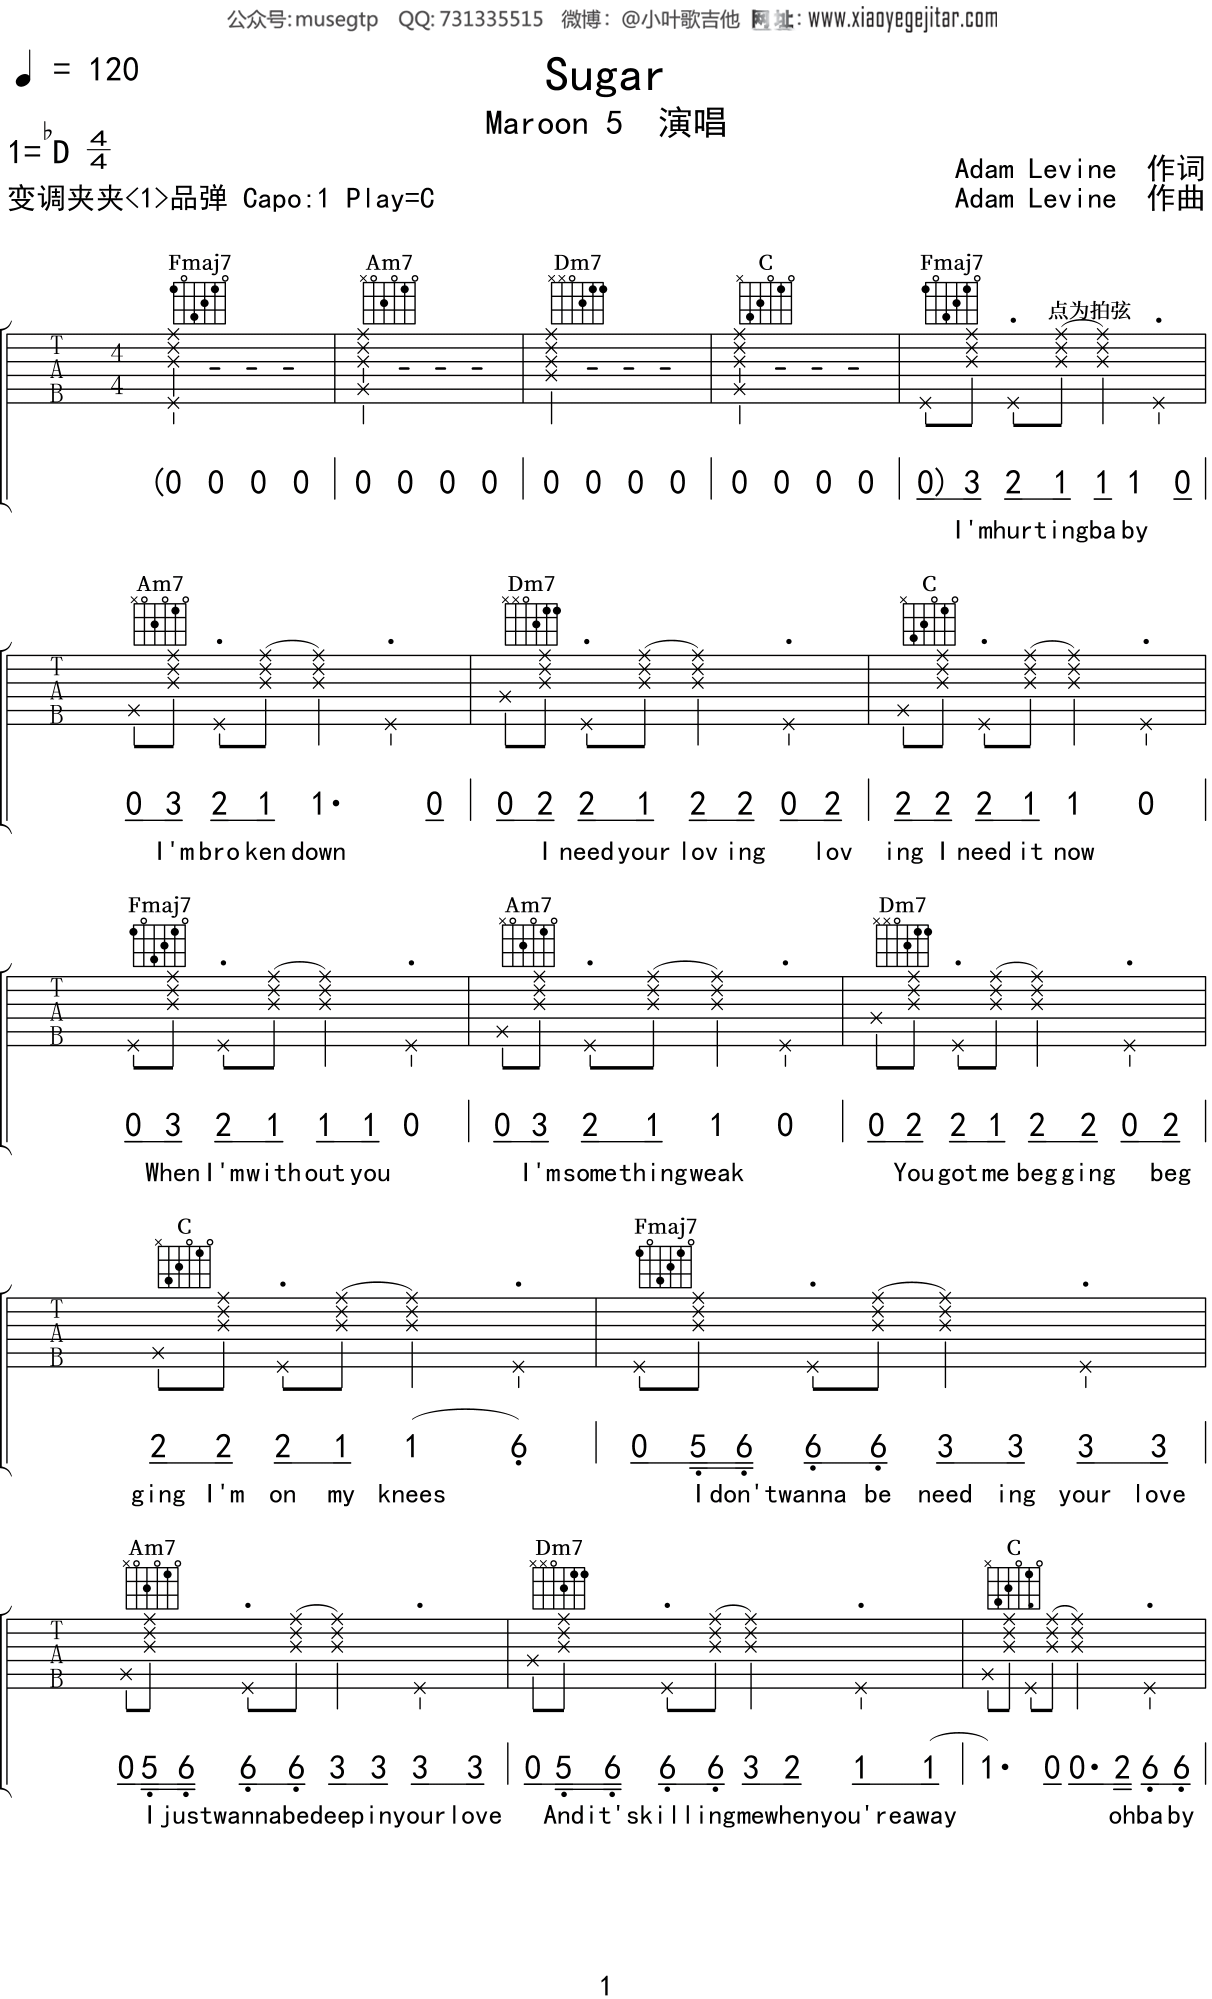 Archies - Sugar, Sugar sheet music for guitar (chords) [PDF]